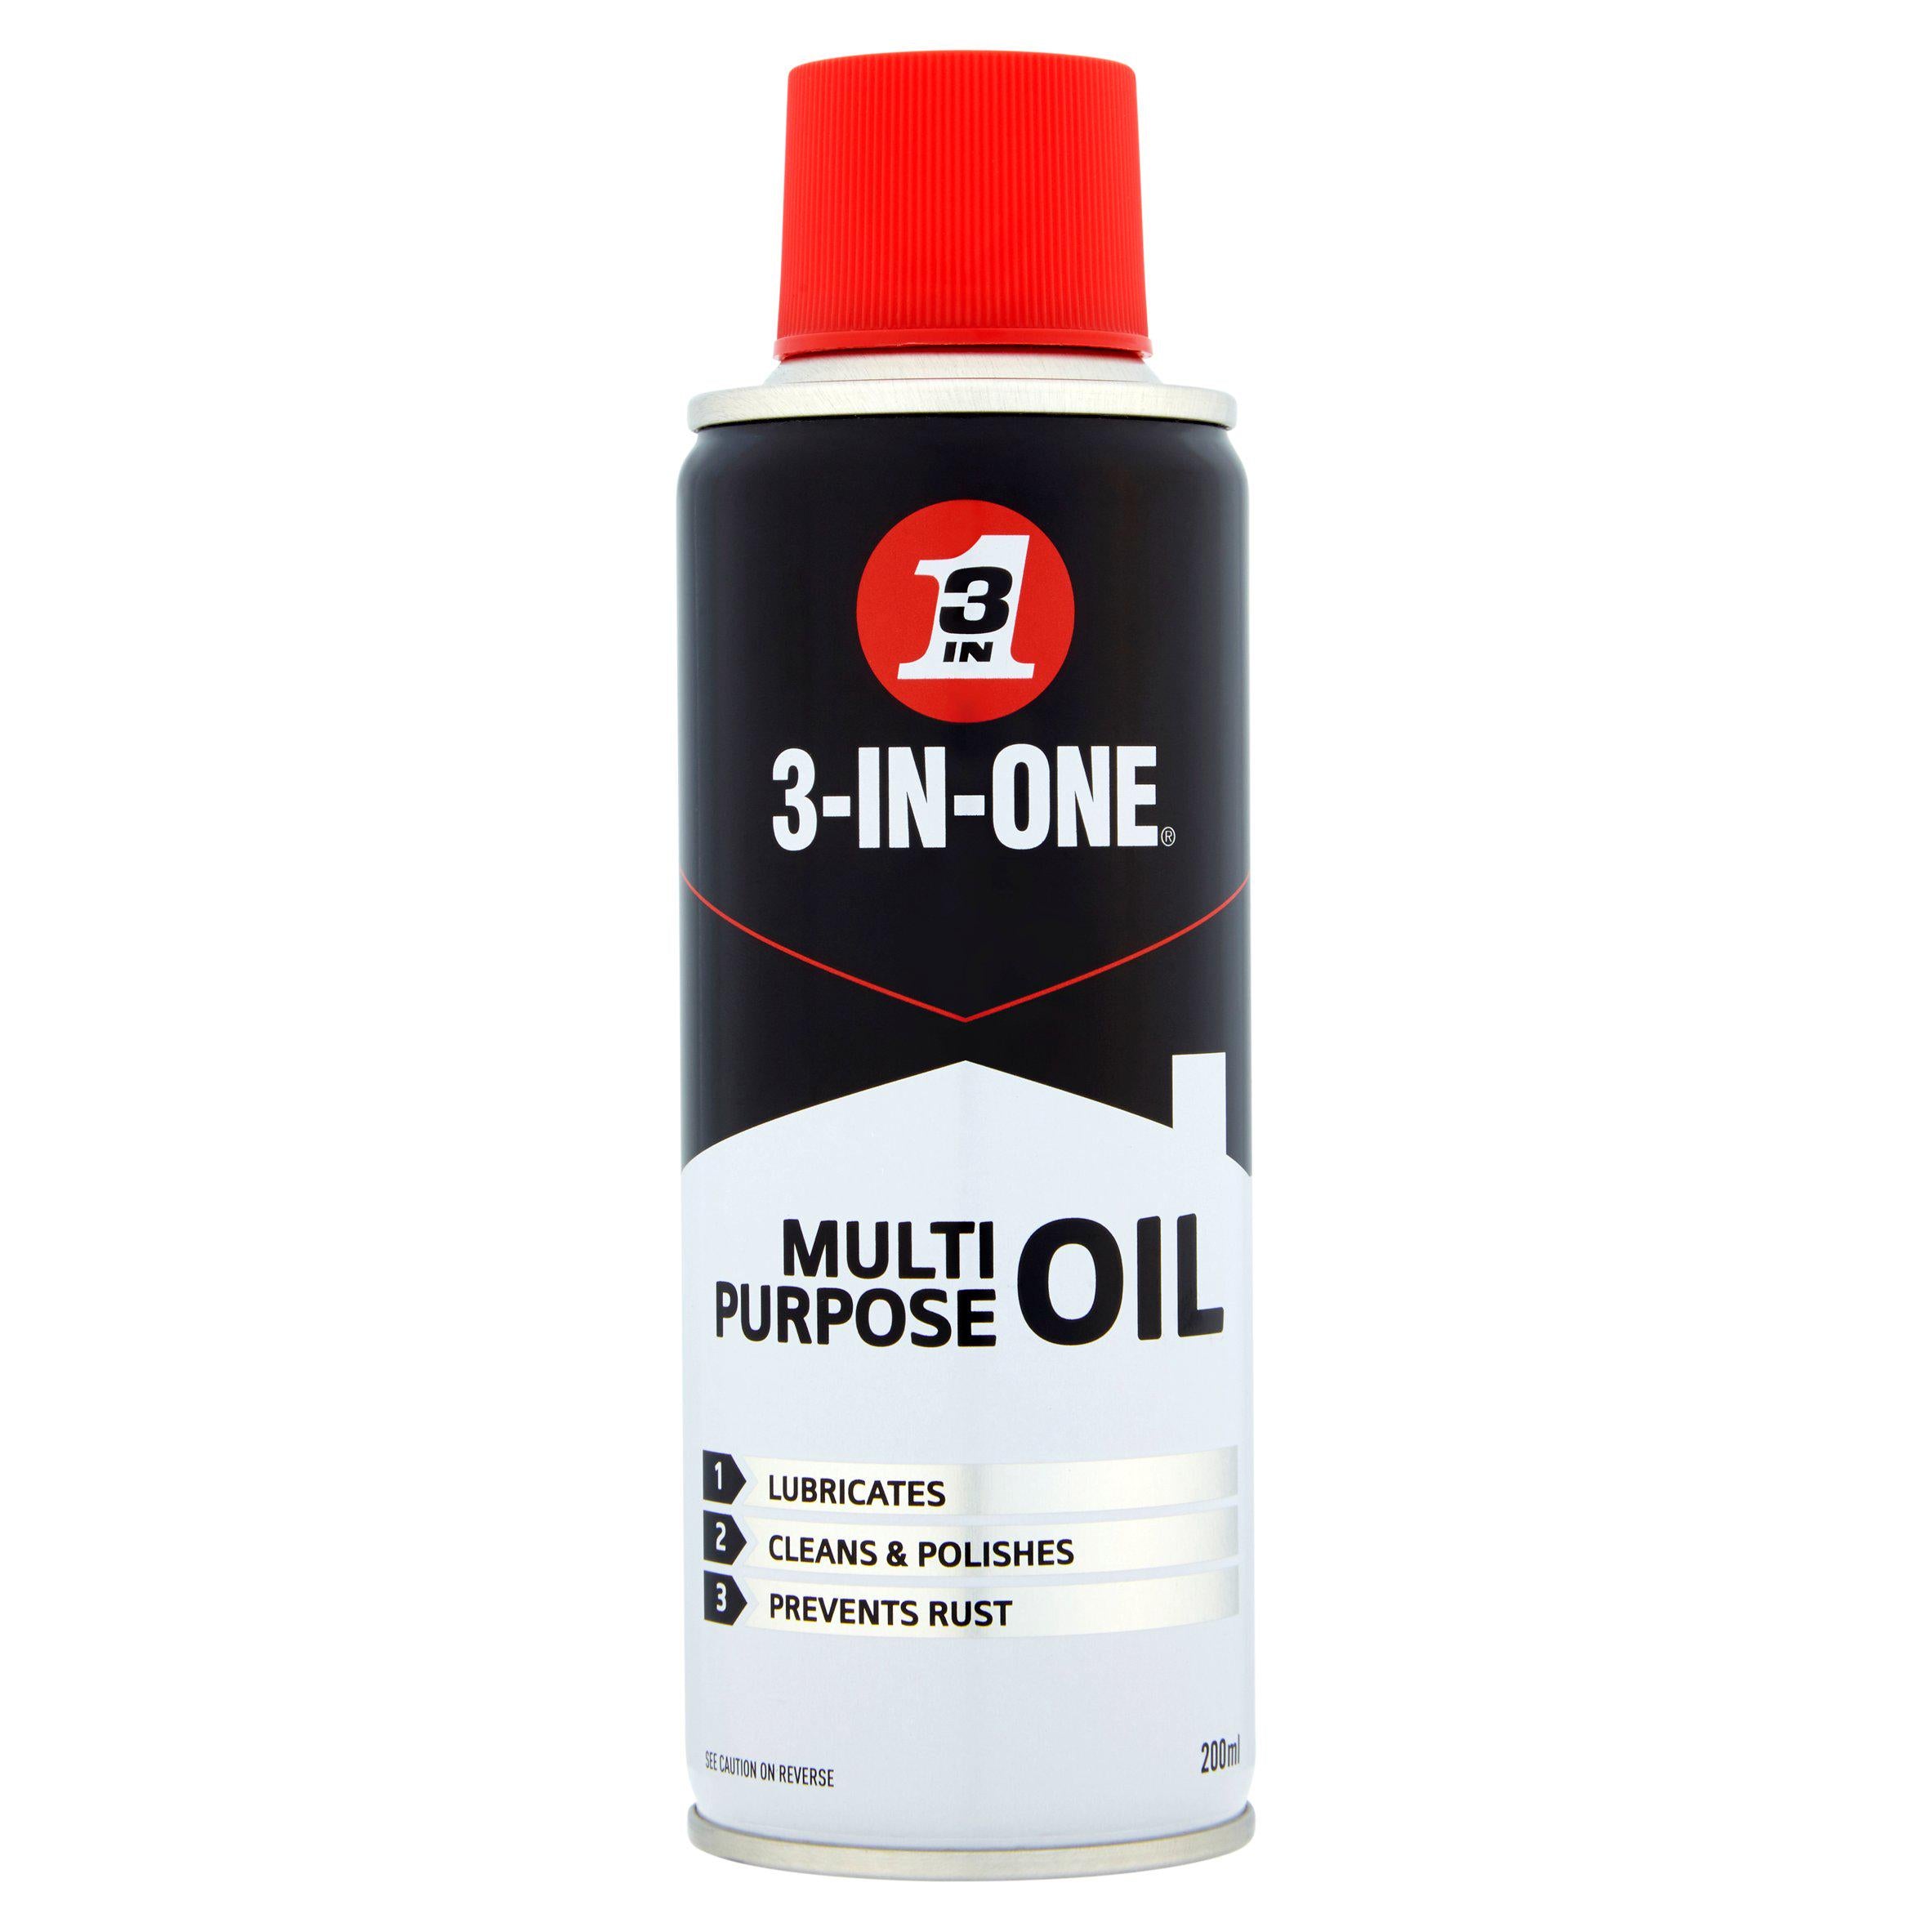 3-IN-ONE Multipurpose Oil Spray 200ml DIY Sainsburys   